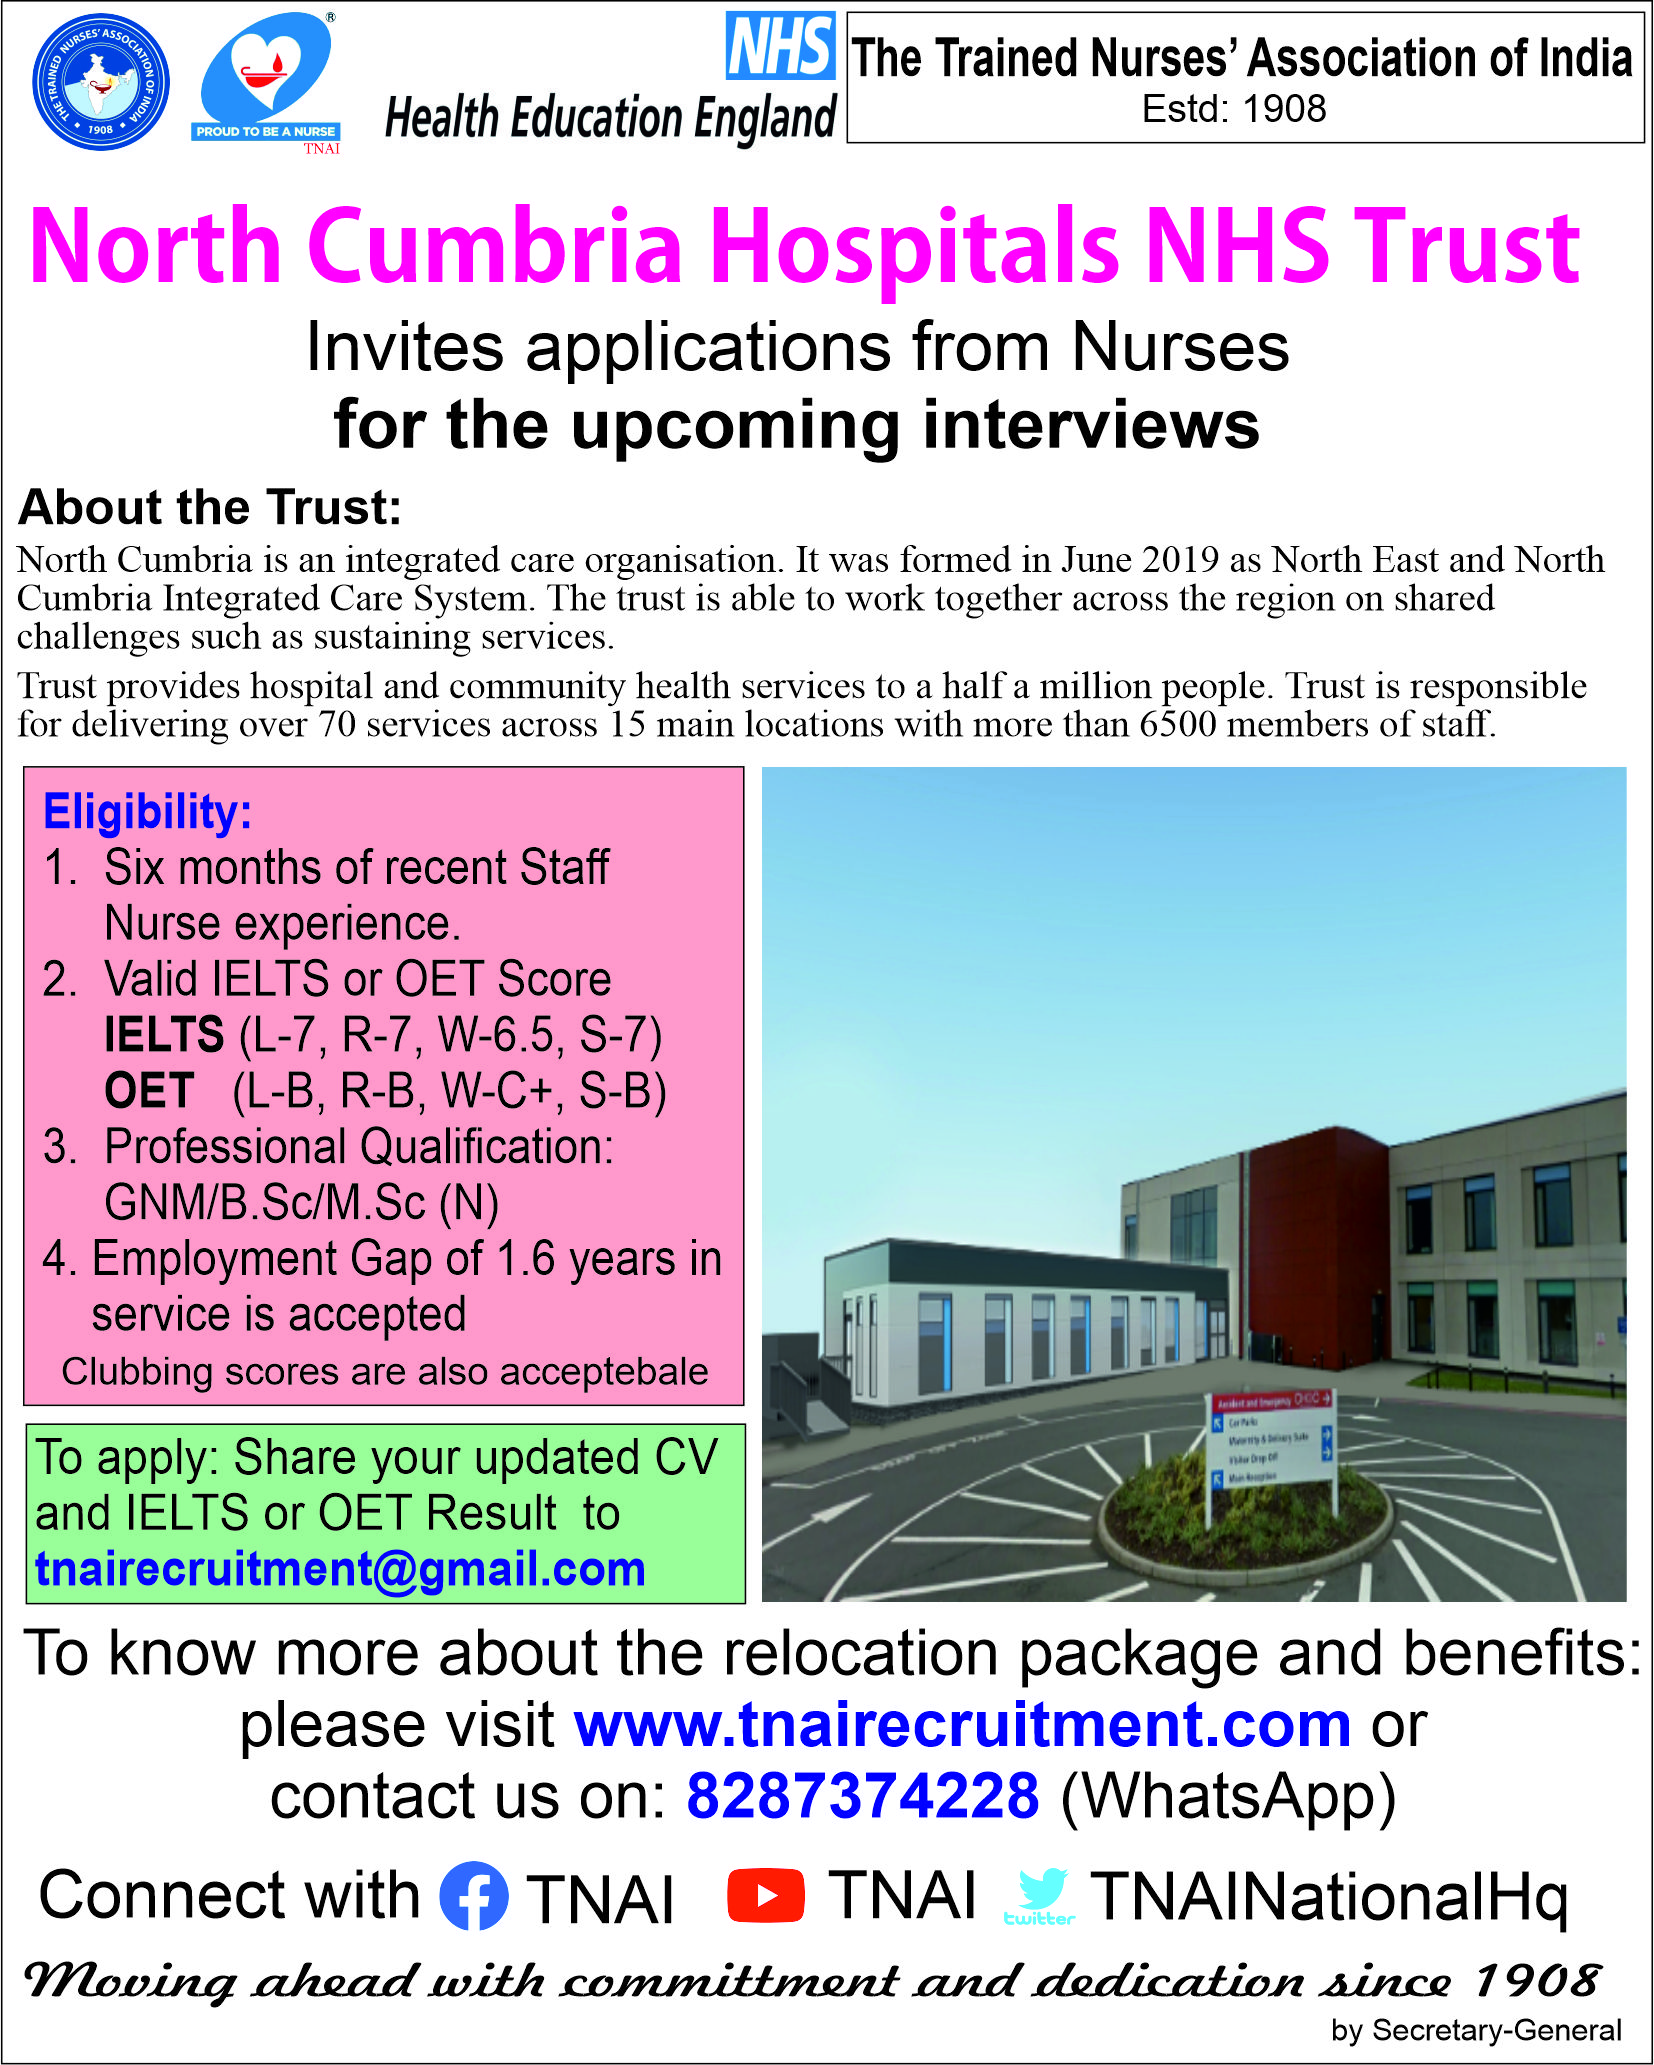 Free Recruitment for Nurses to UK